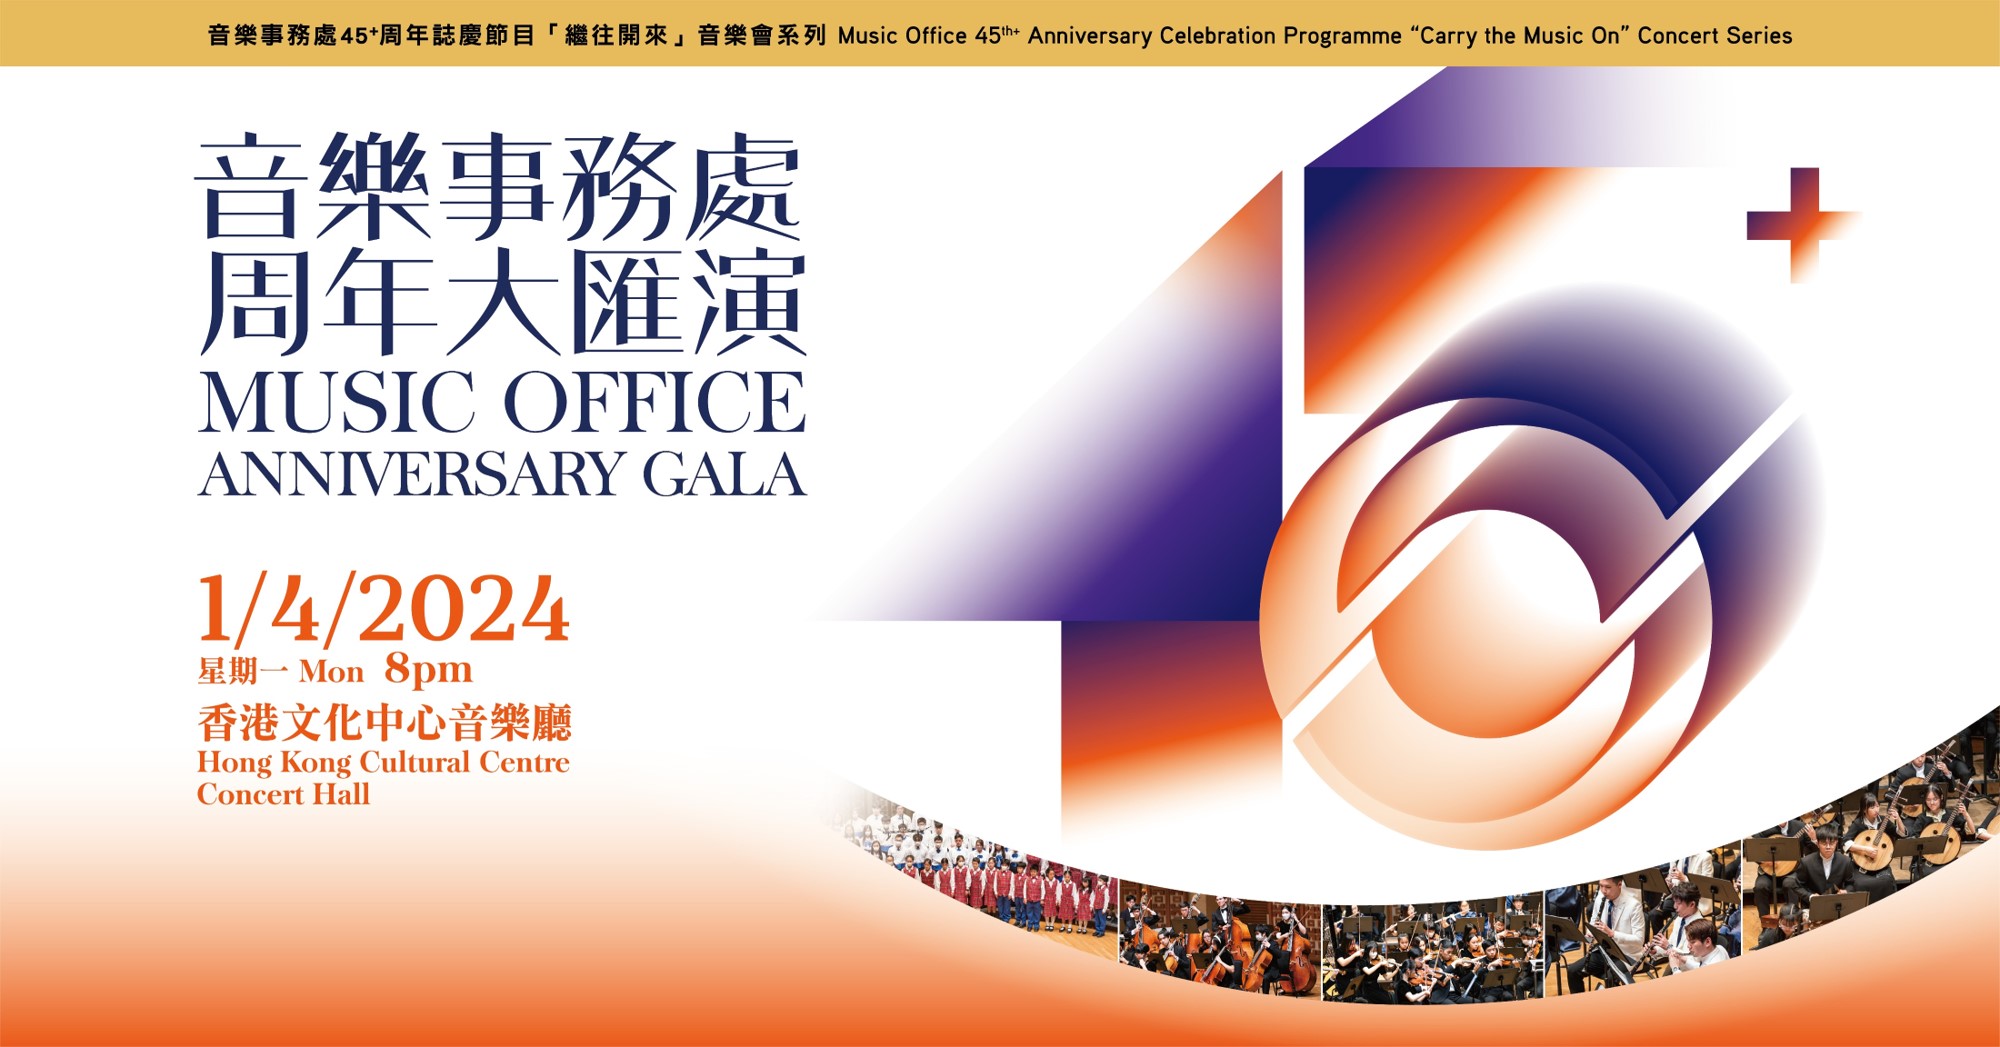 Music Office 45th+ Anniversary Gala